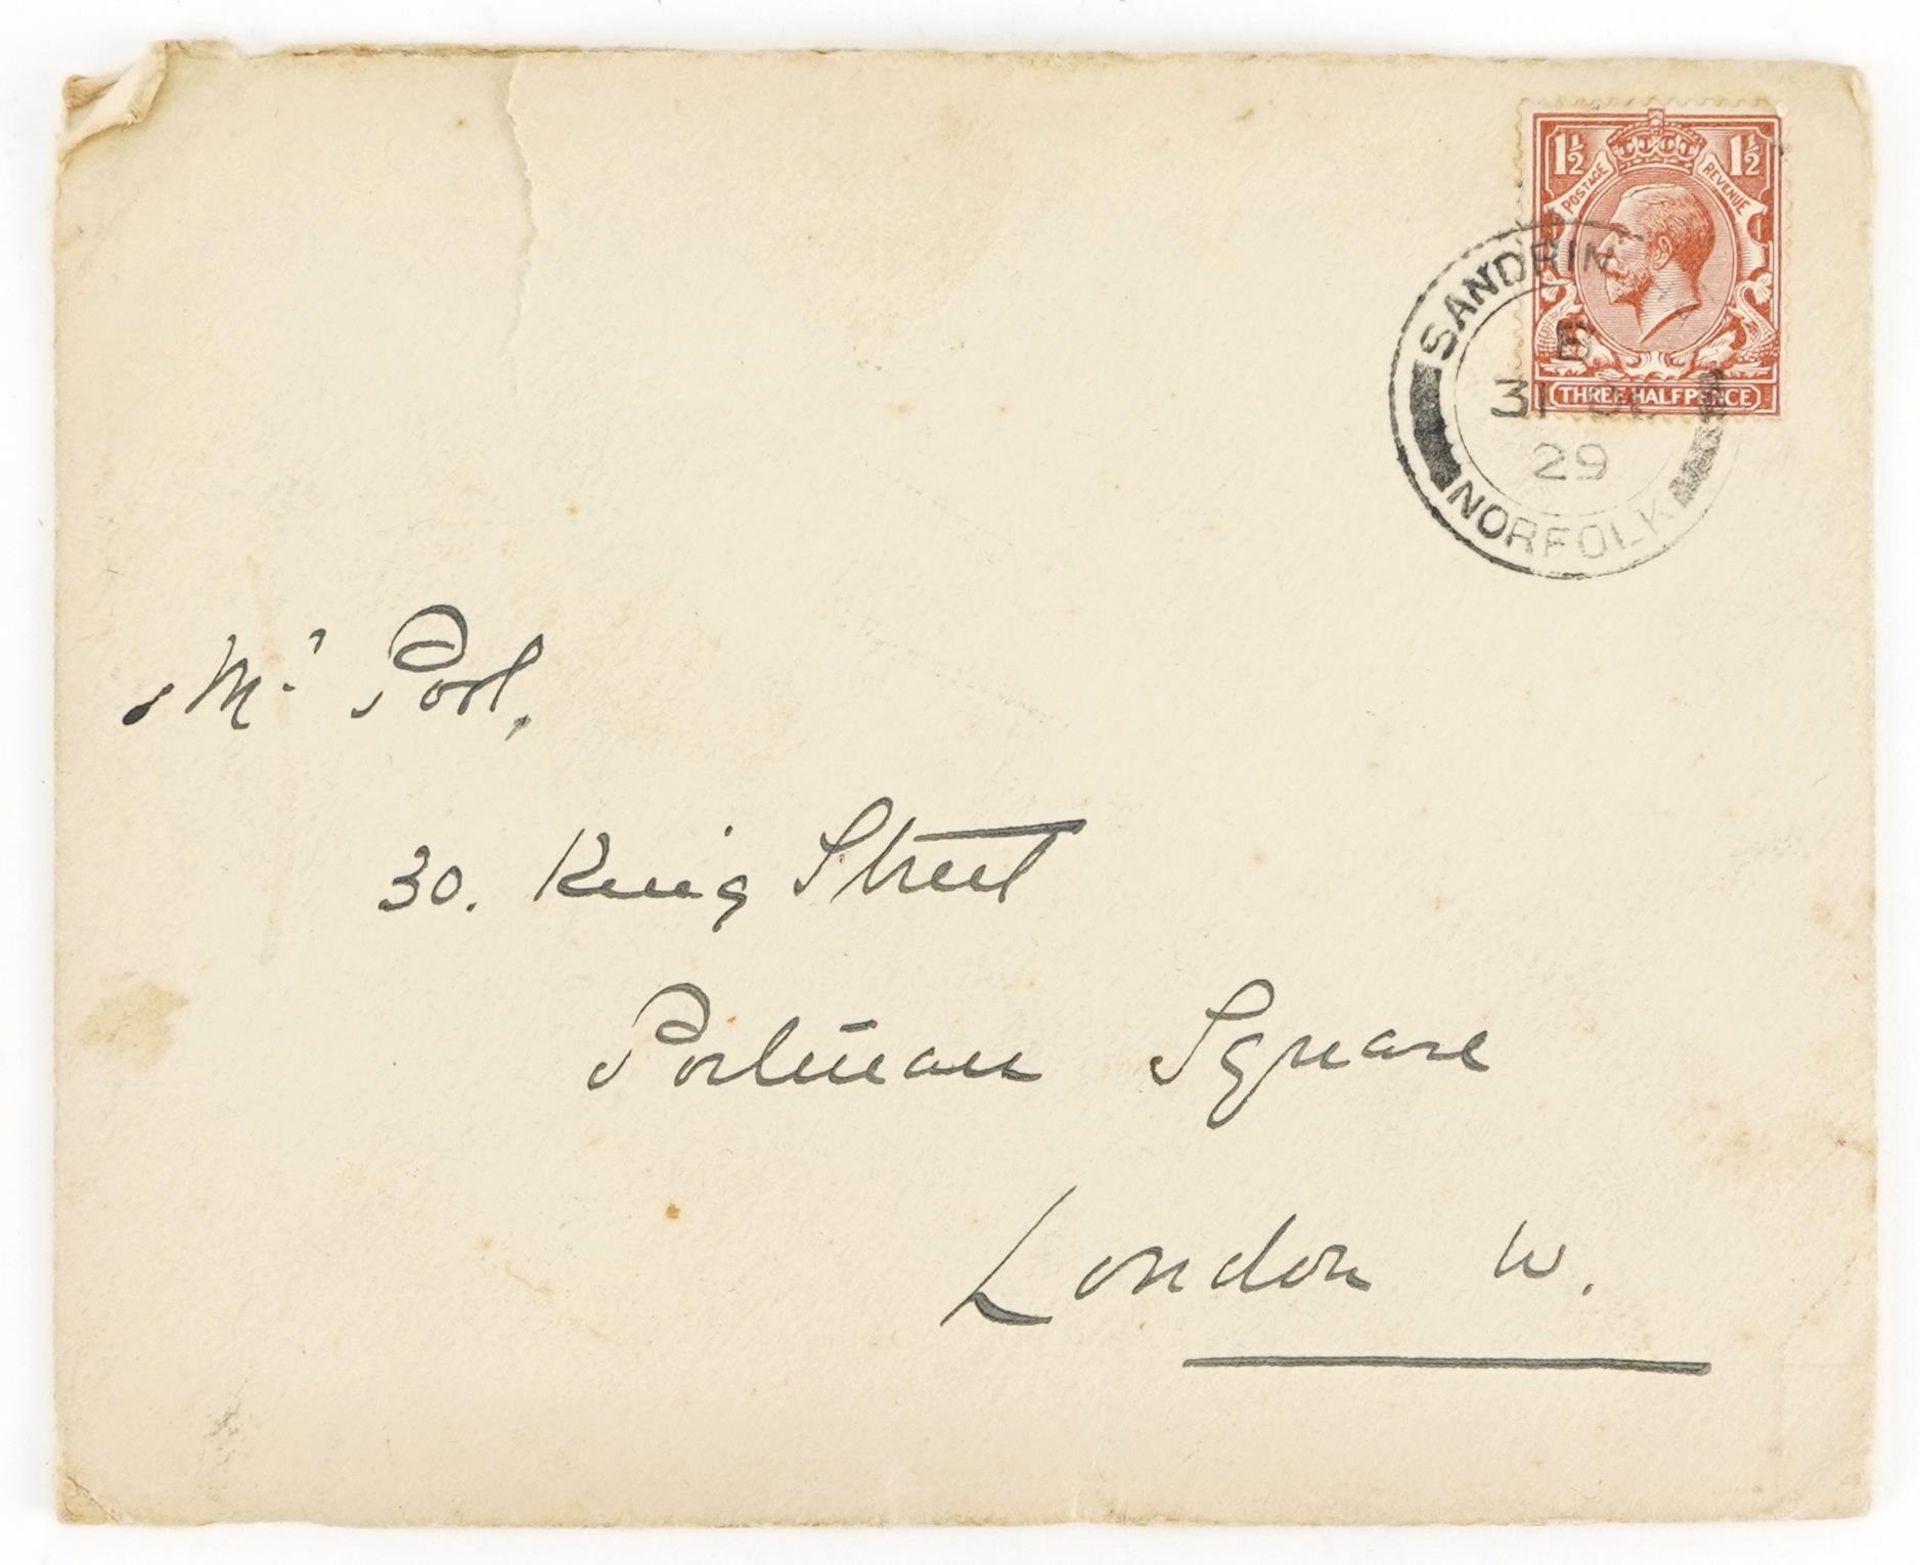 Queen Elizabeth II interest letter cards for 1929 and 1930 from the Sandringham Norfolk Estate to Mr - Image 4 of 5